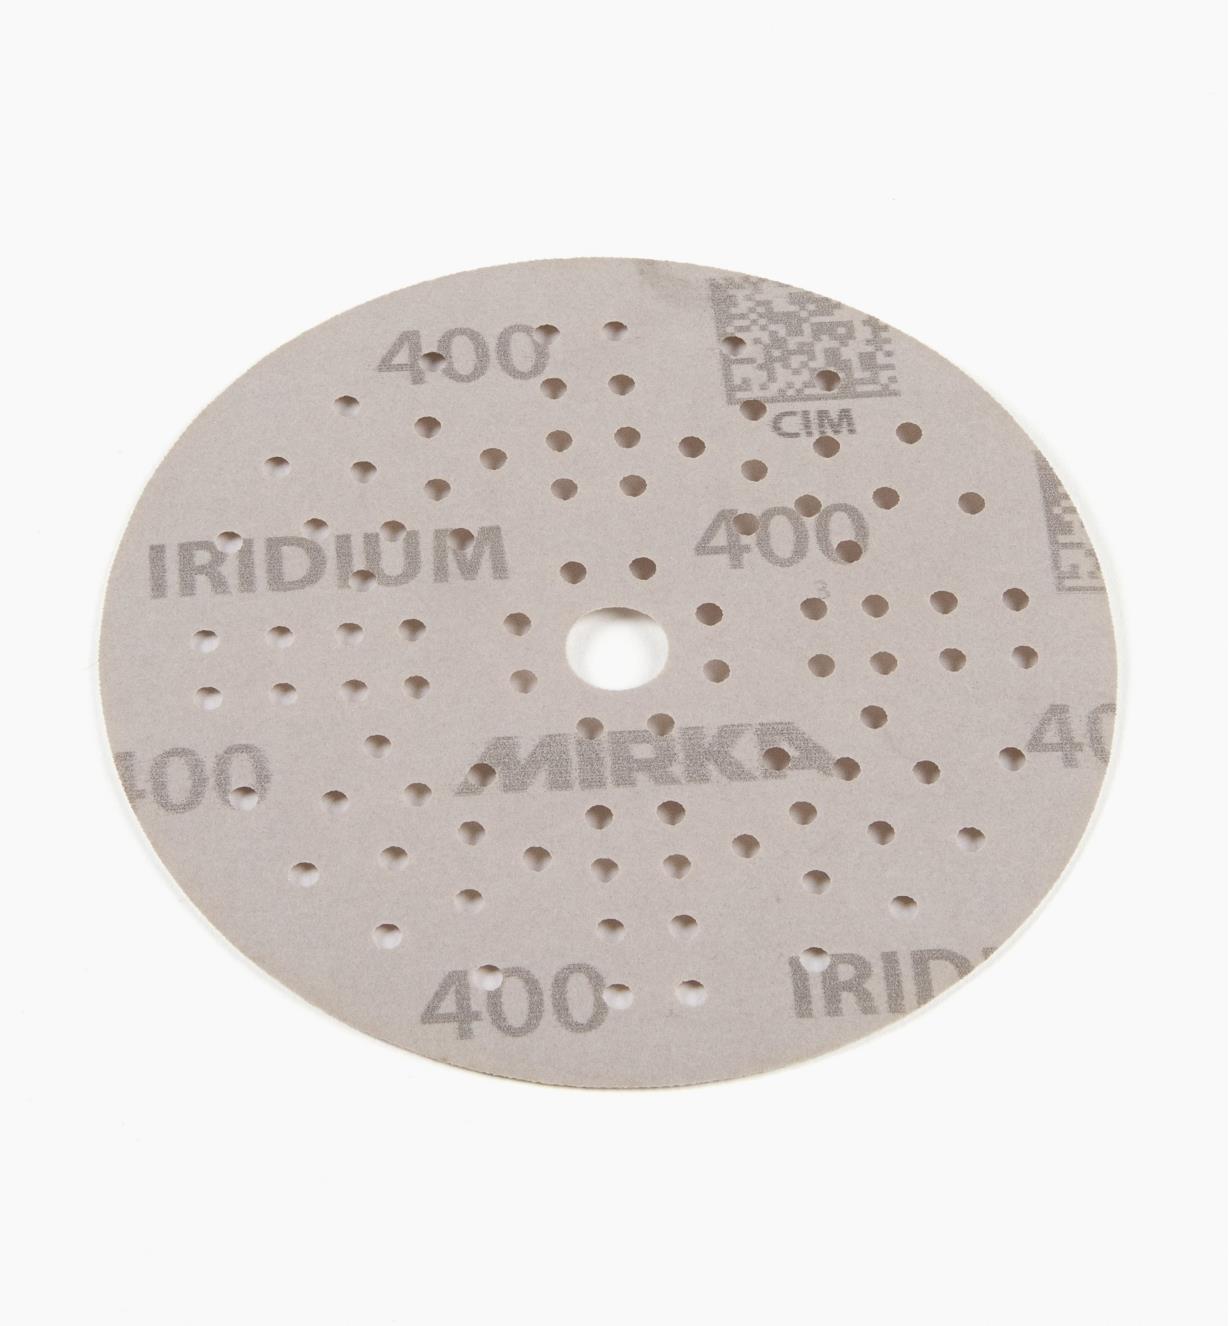 08K0930 - 400x 5" 89-Hole Iridium Grip Disc, ea.